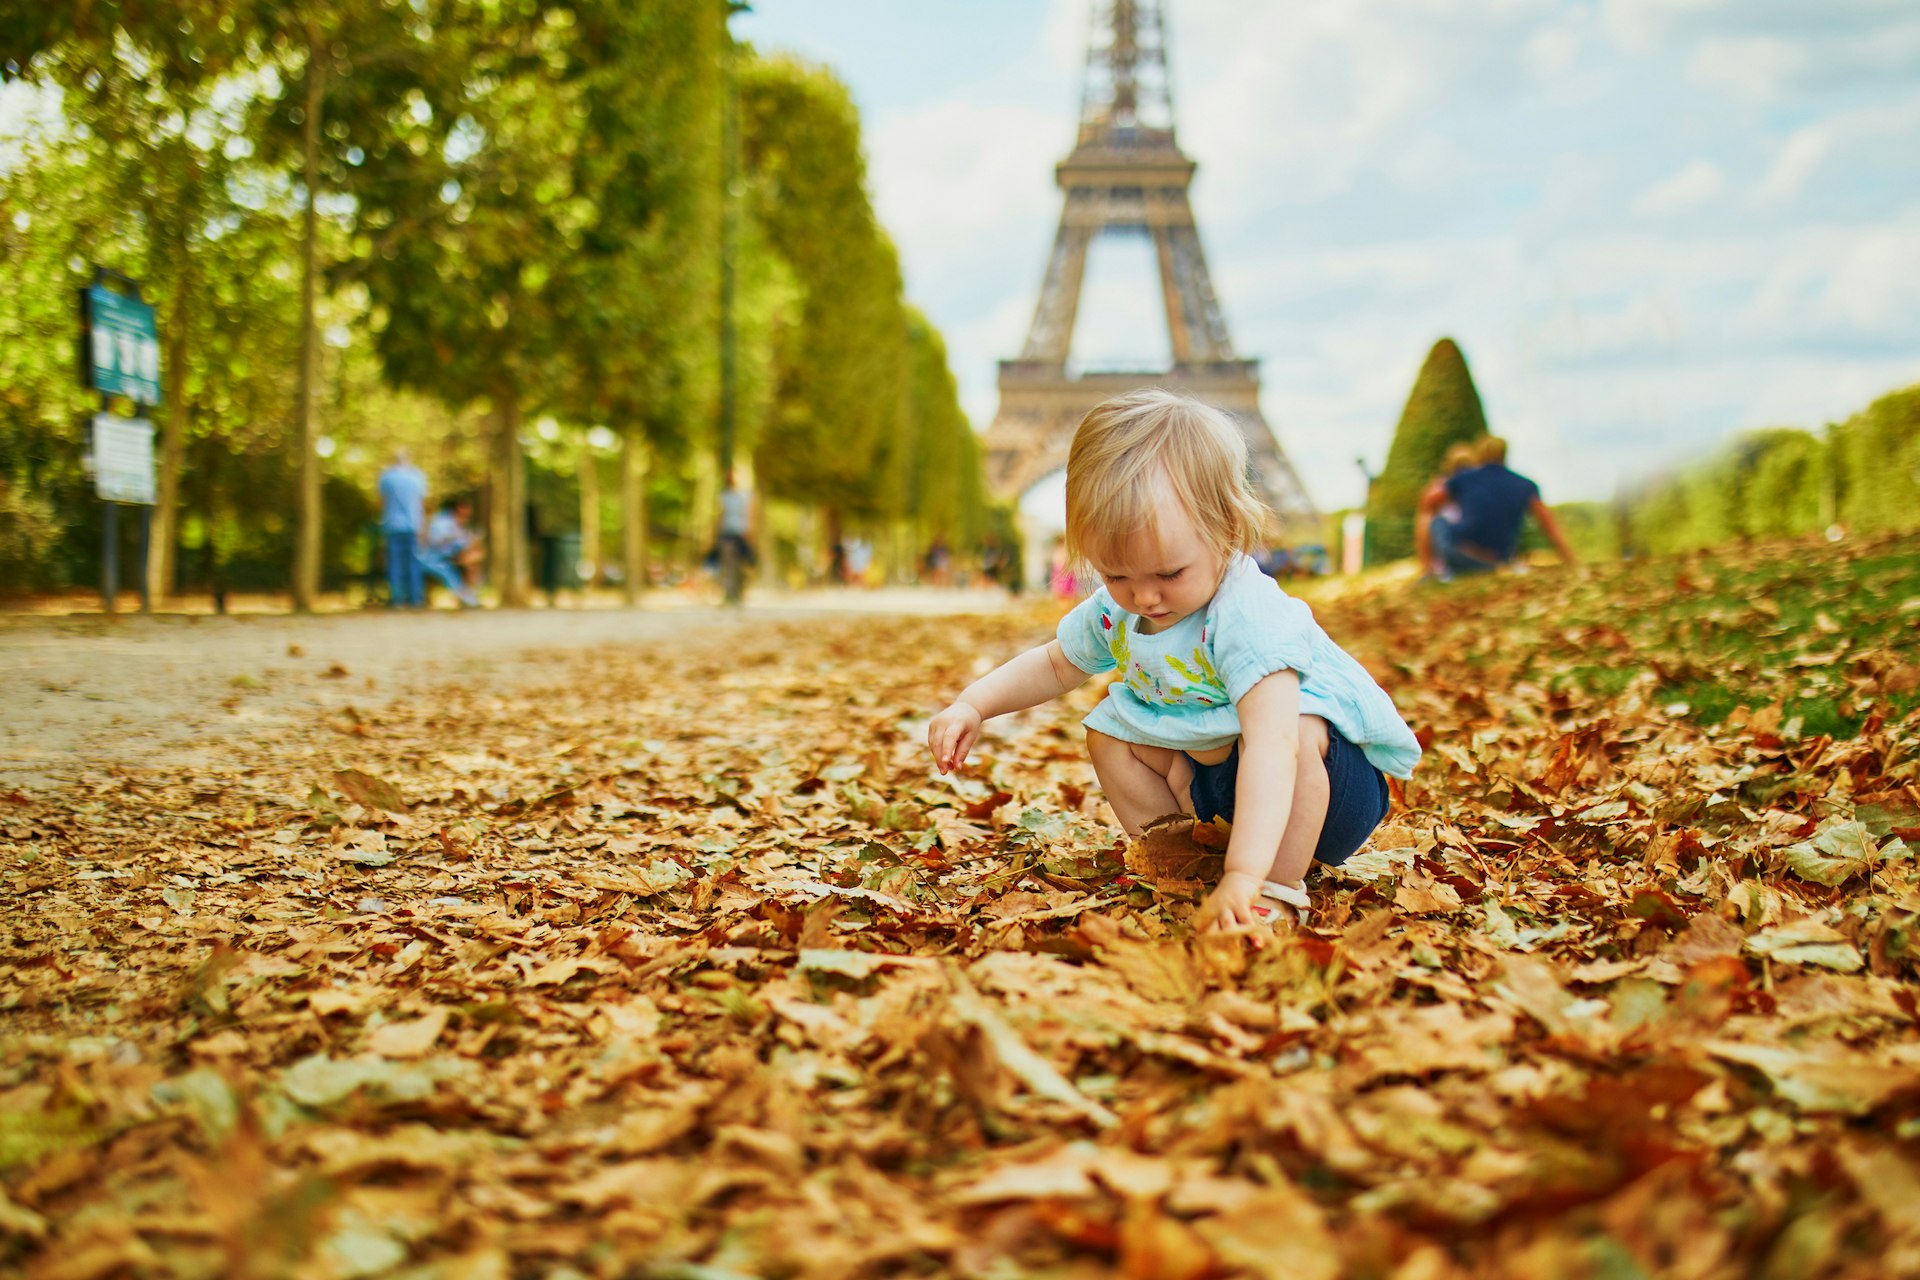 Adorable toddler girl walking on fallen autumn leaves near the Eiffel tower